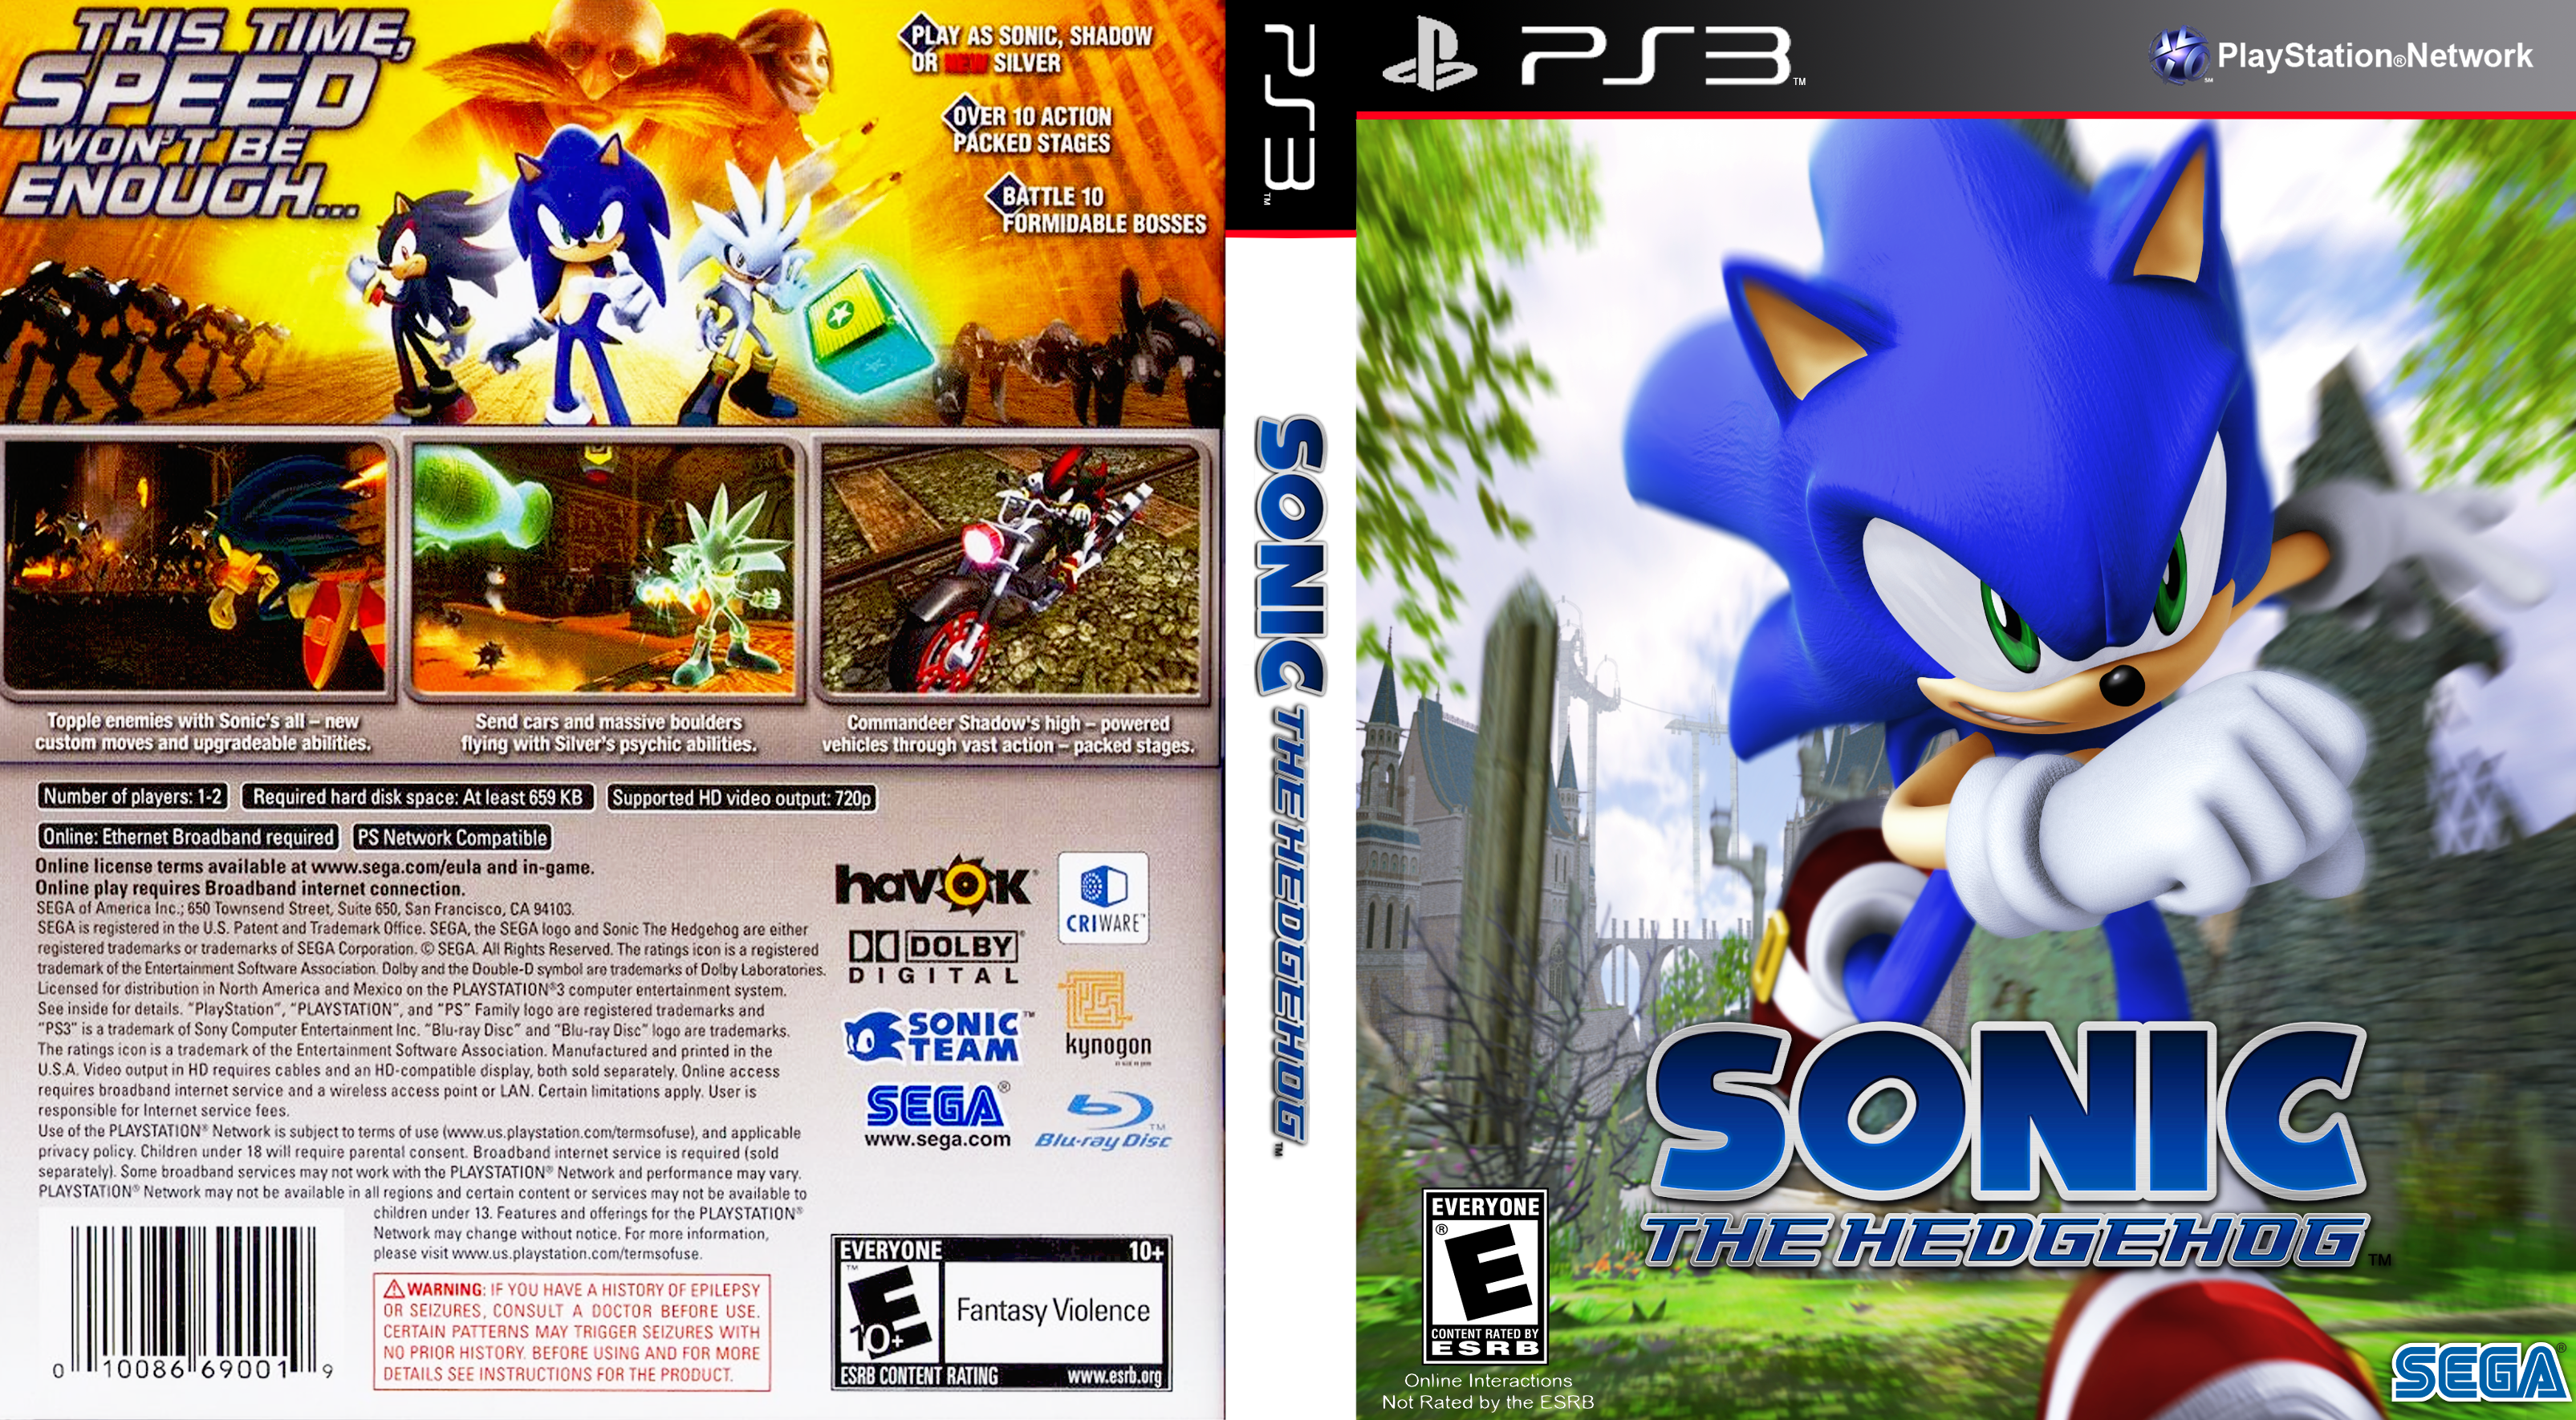 Maan haspel leven Sonic The Hedgehog 2006 Modern PS3 Cover by Rocket041 on DeviantArt